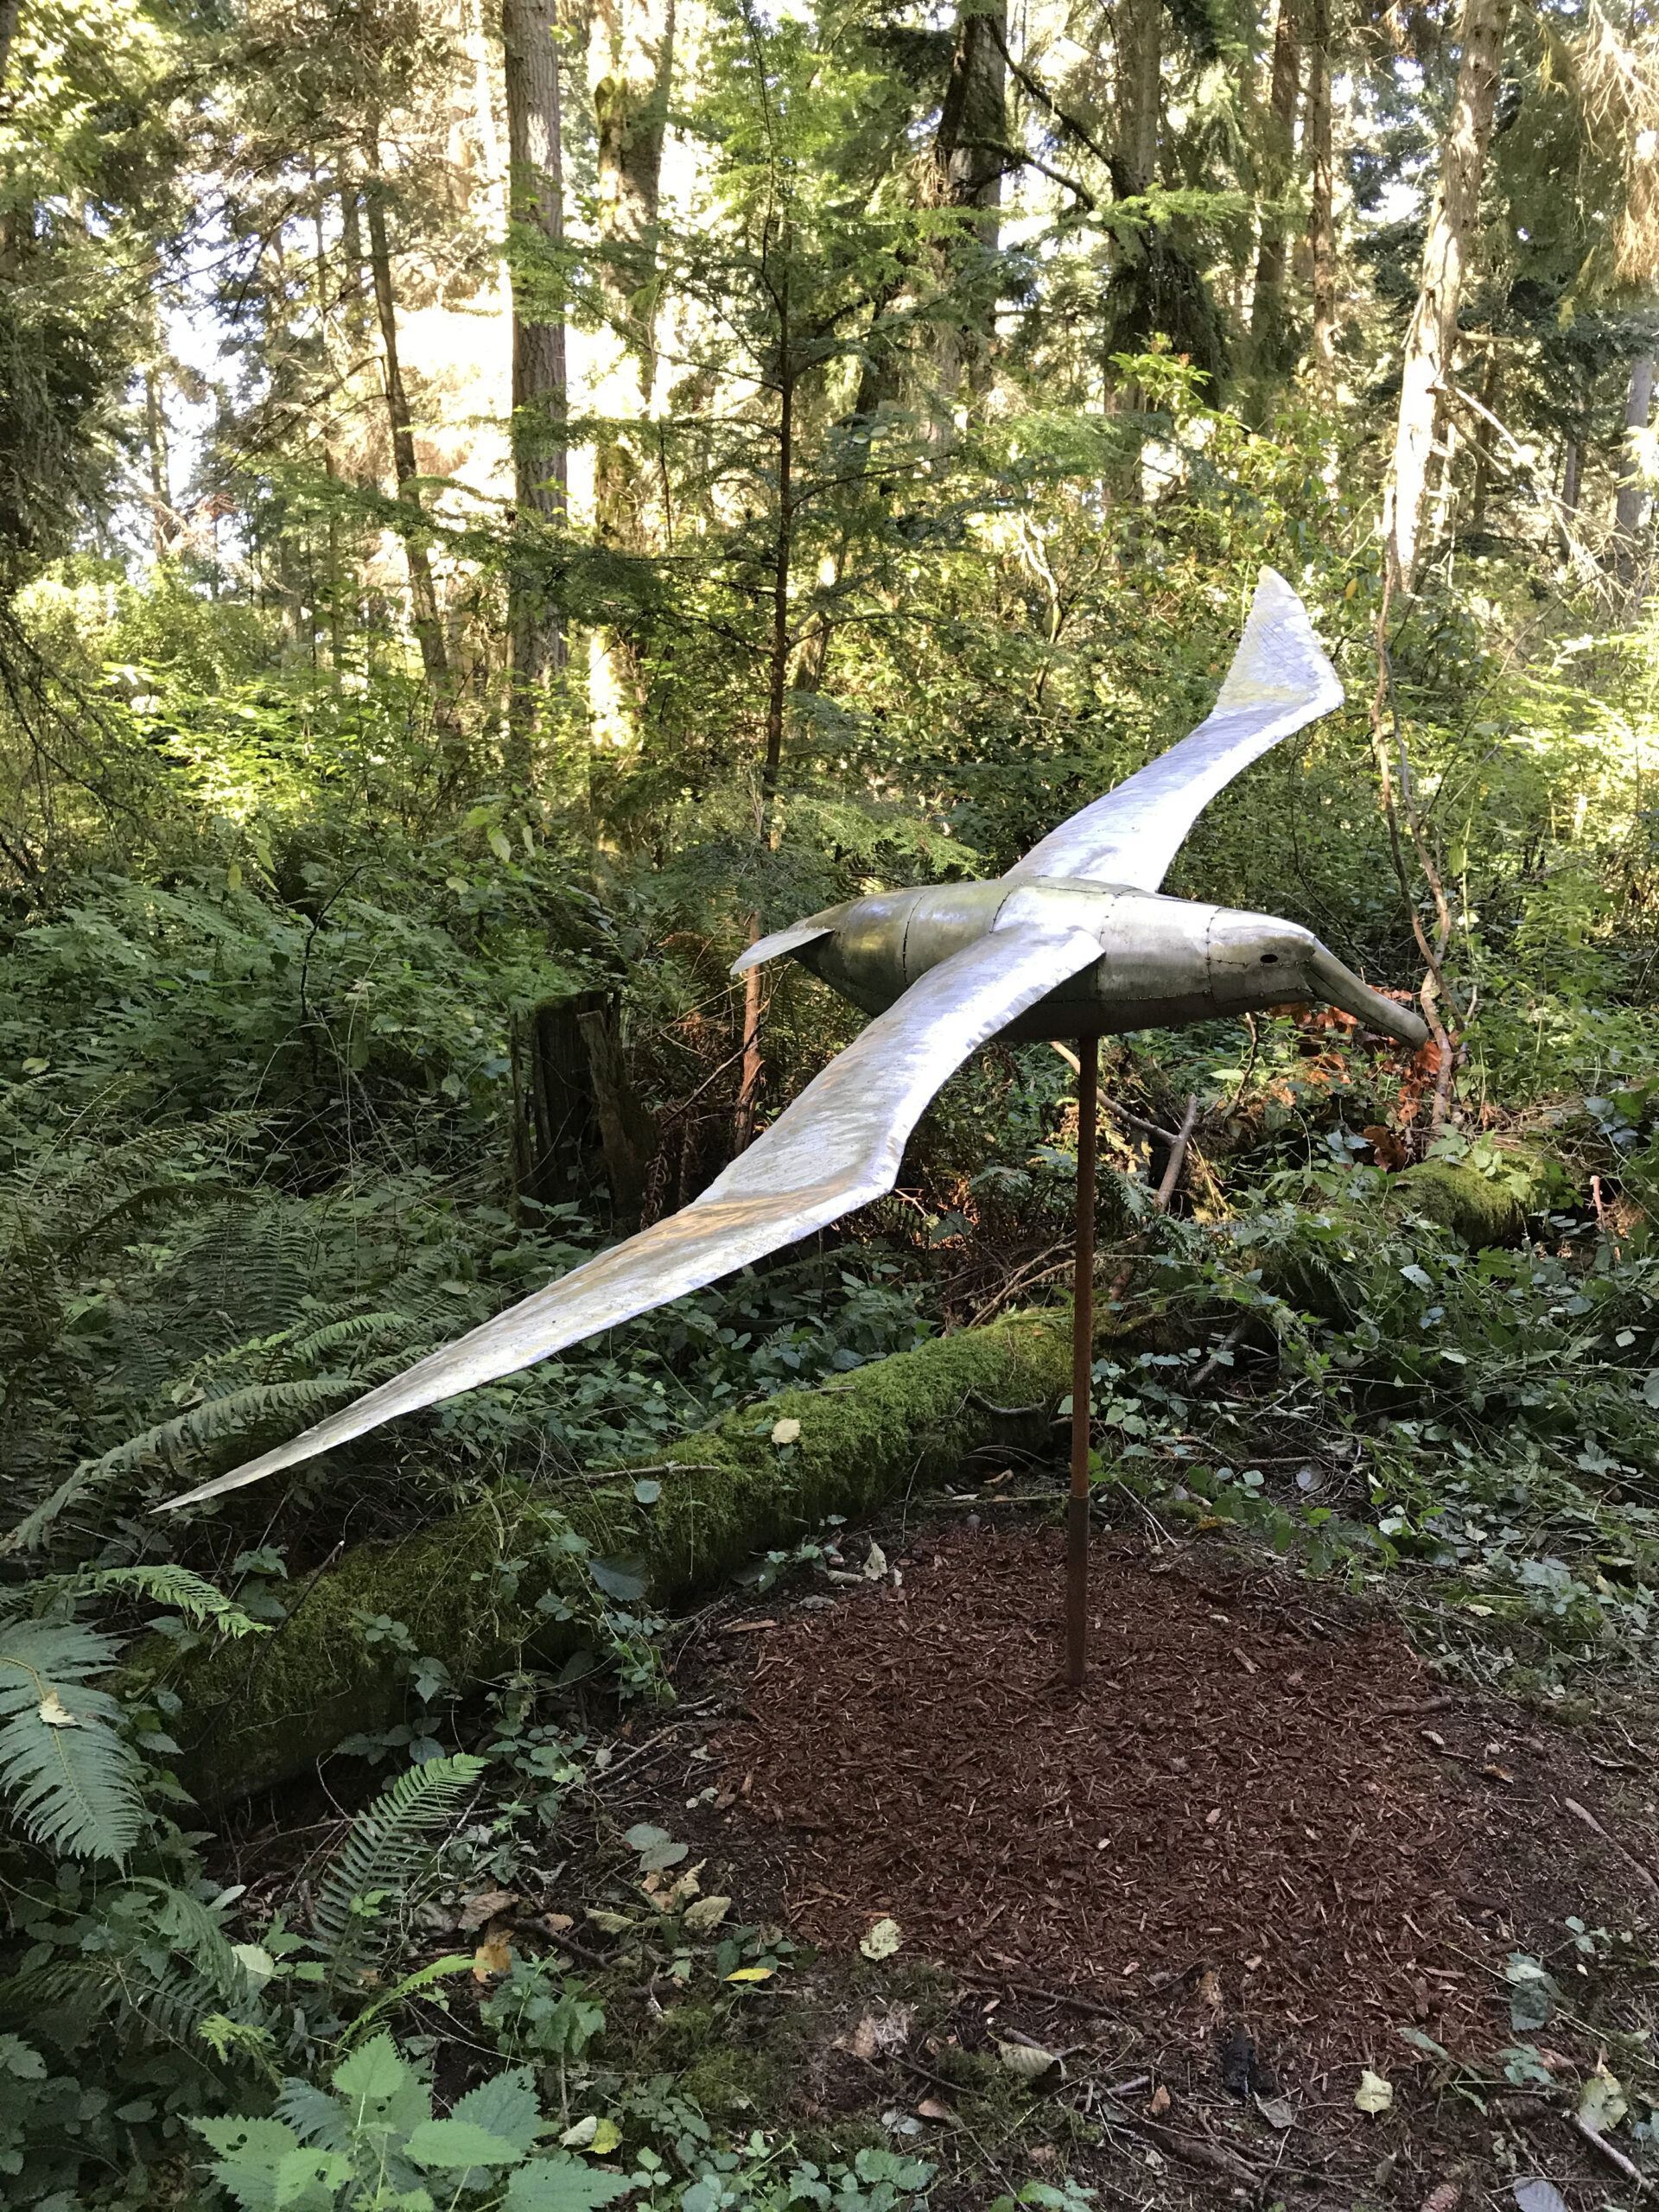 Sculptor Greg Neal sculpture Gliding Albatross at Price Sculpture Forest sculpture park garden in Coupeville on Whidbey Island